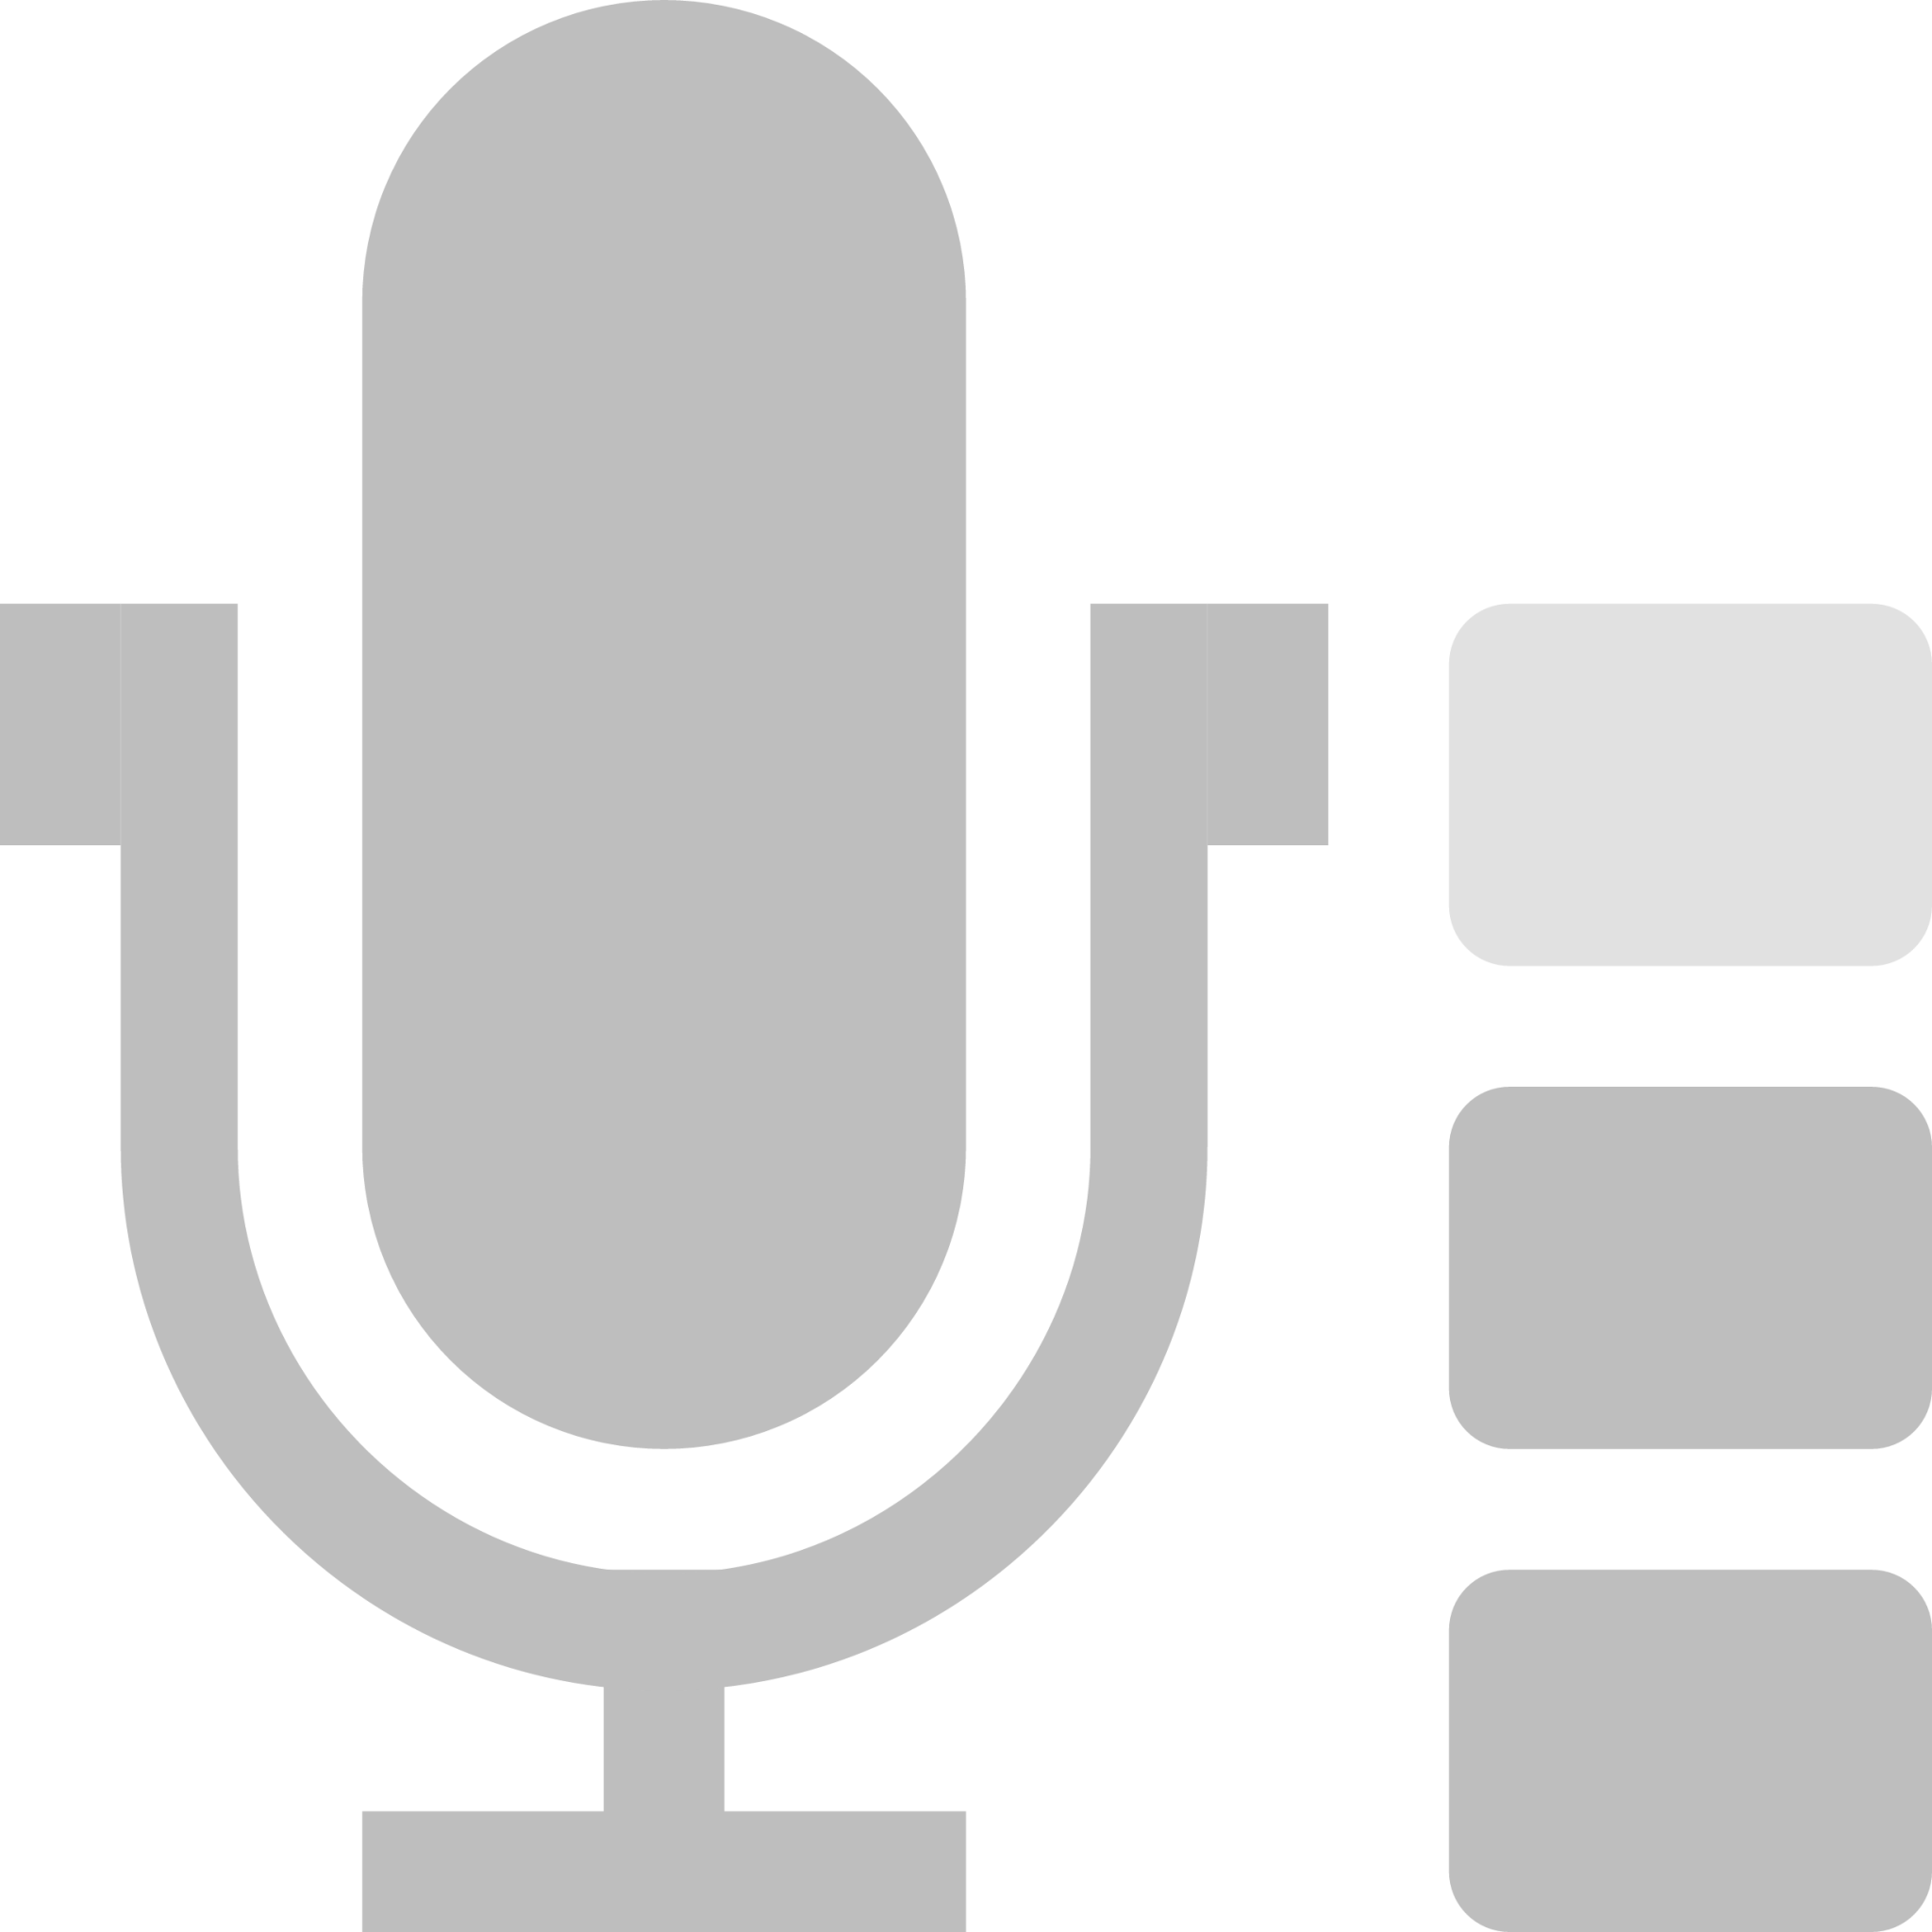 microphone sensitivity medium symbolic icon